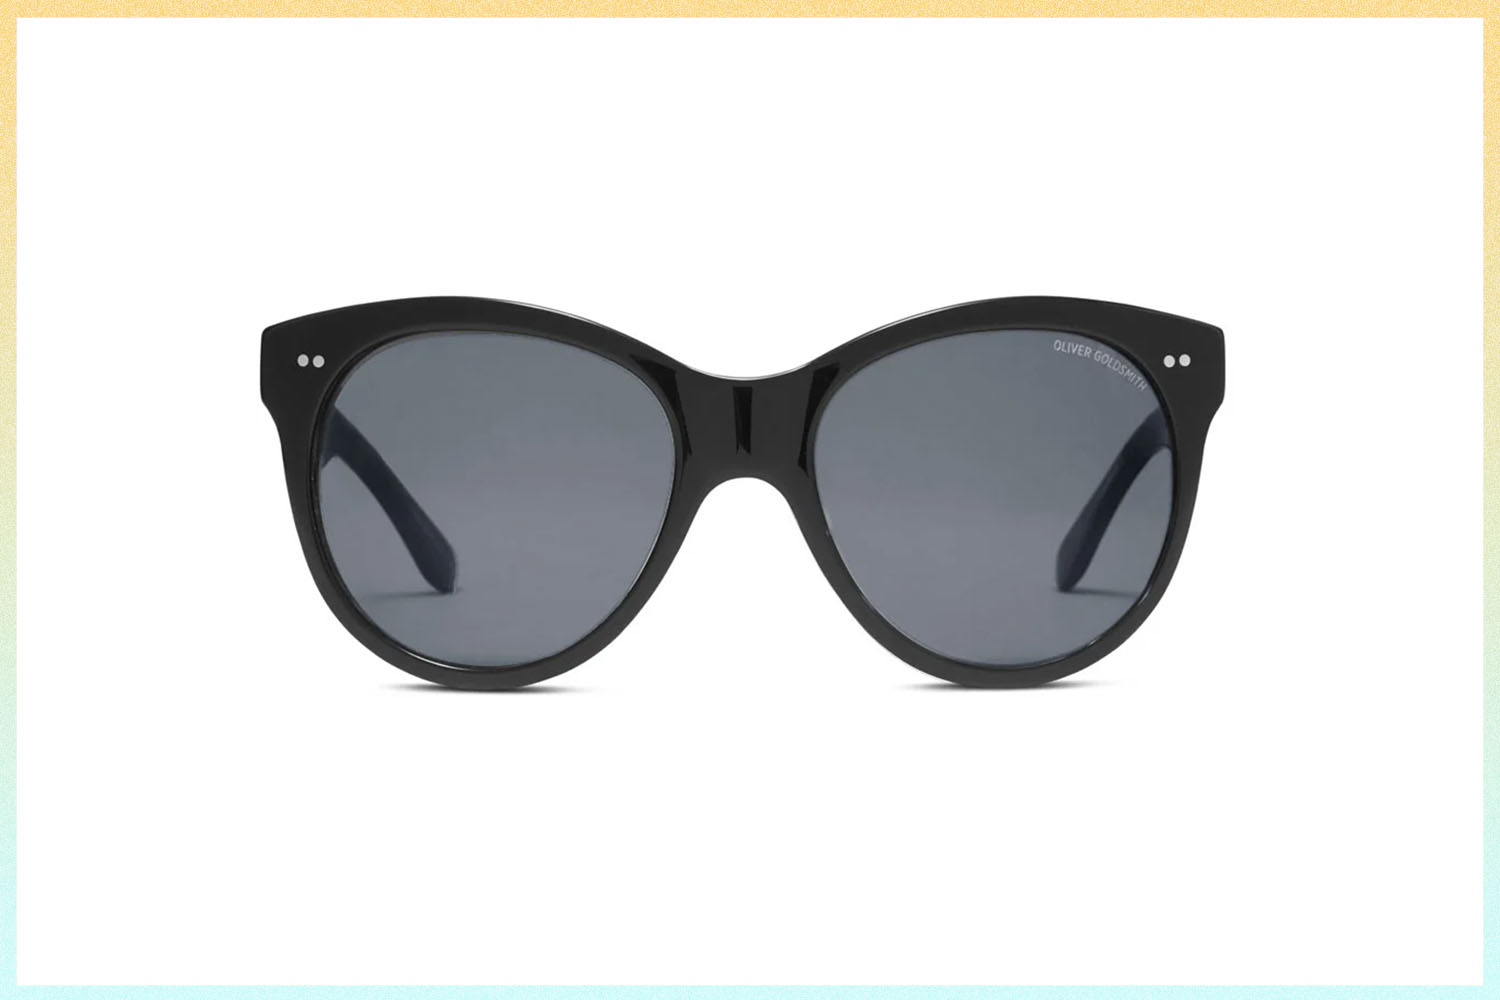 Oliver Goldsmith Manhattan Sunglasses in black